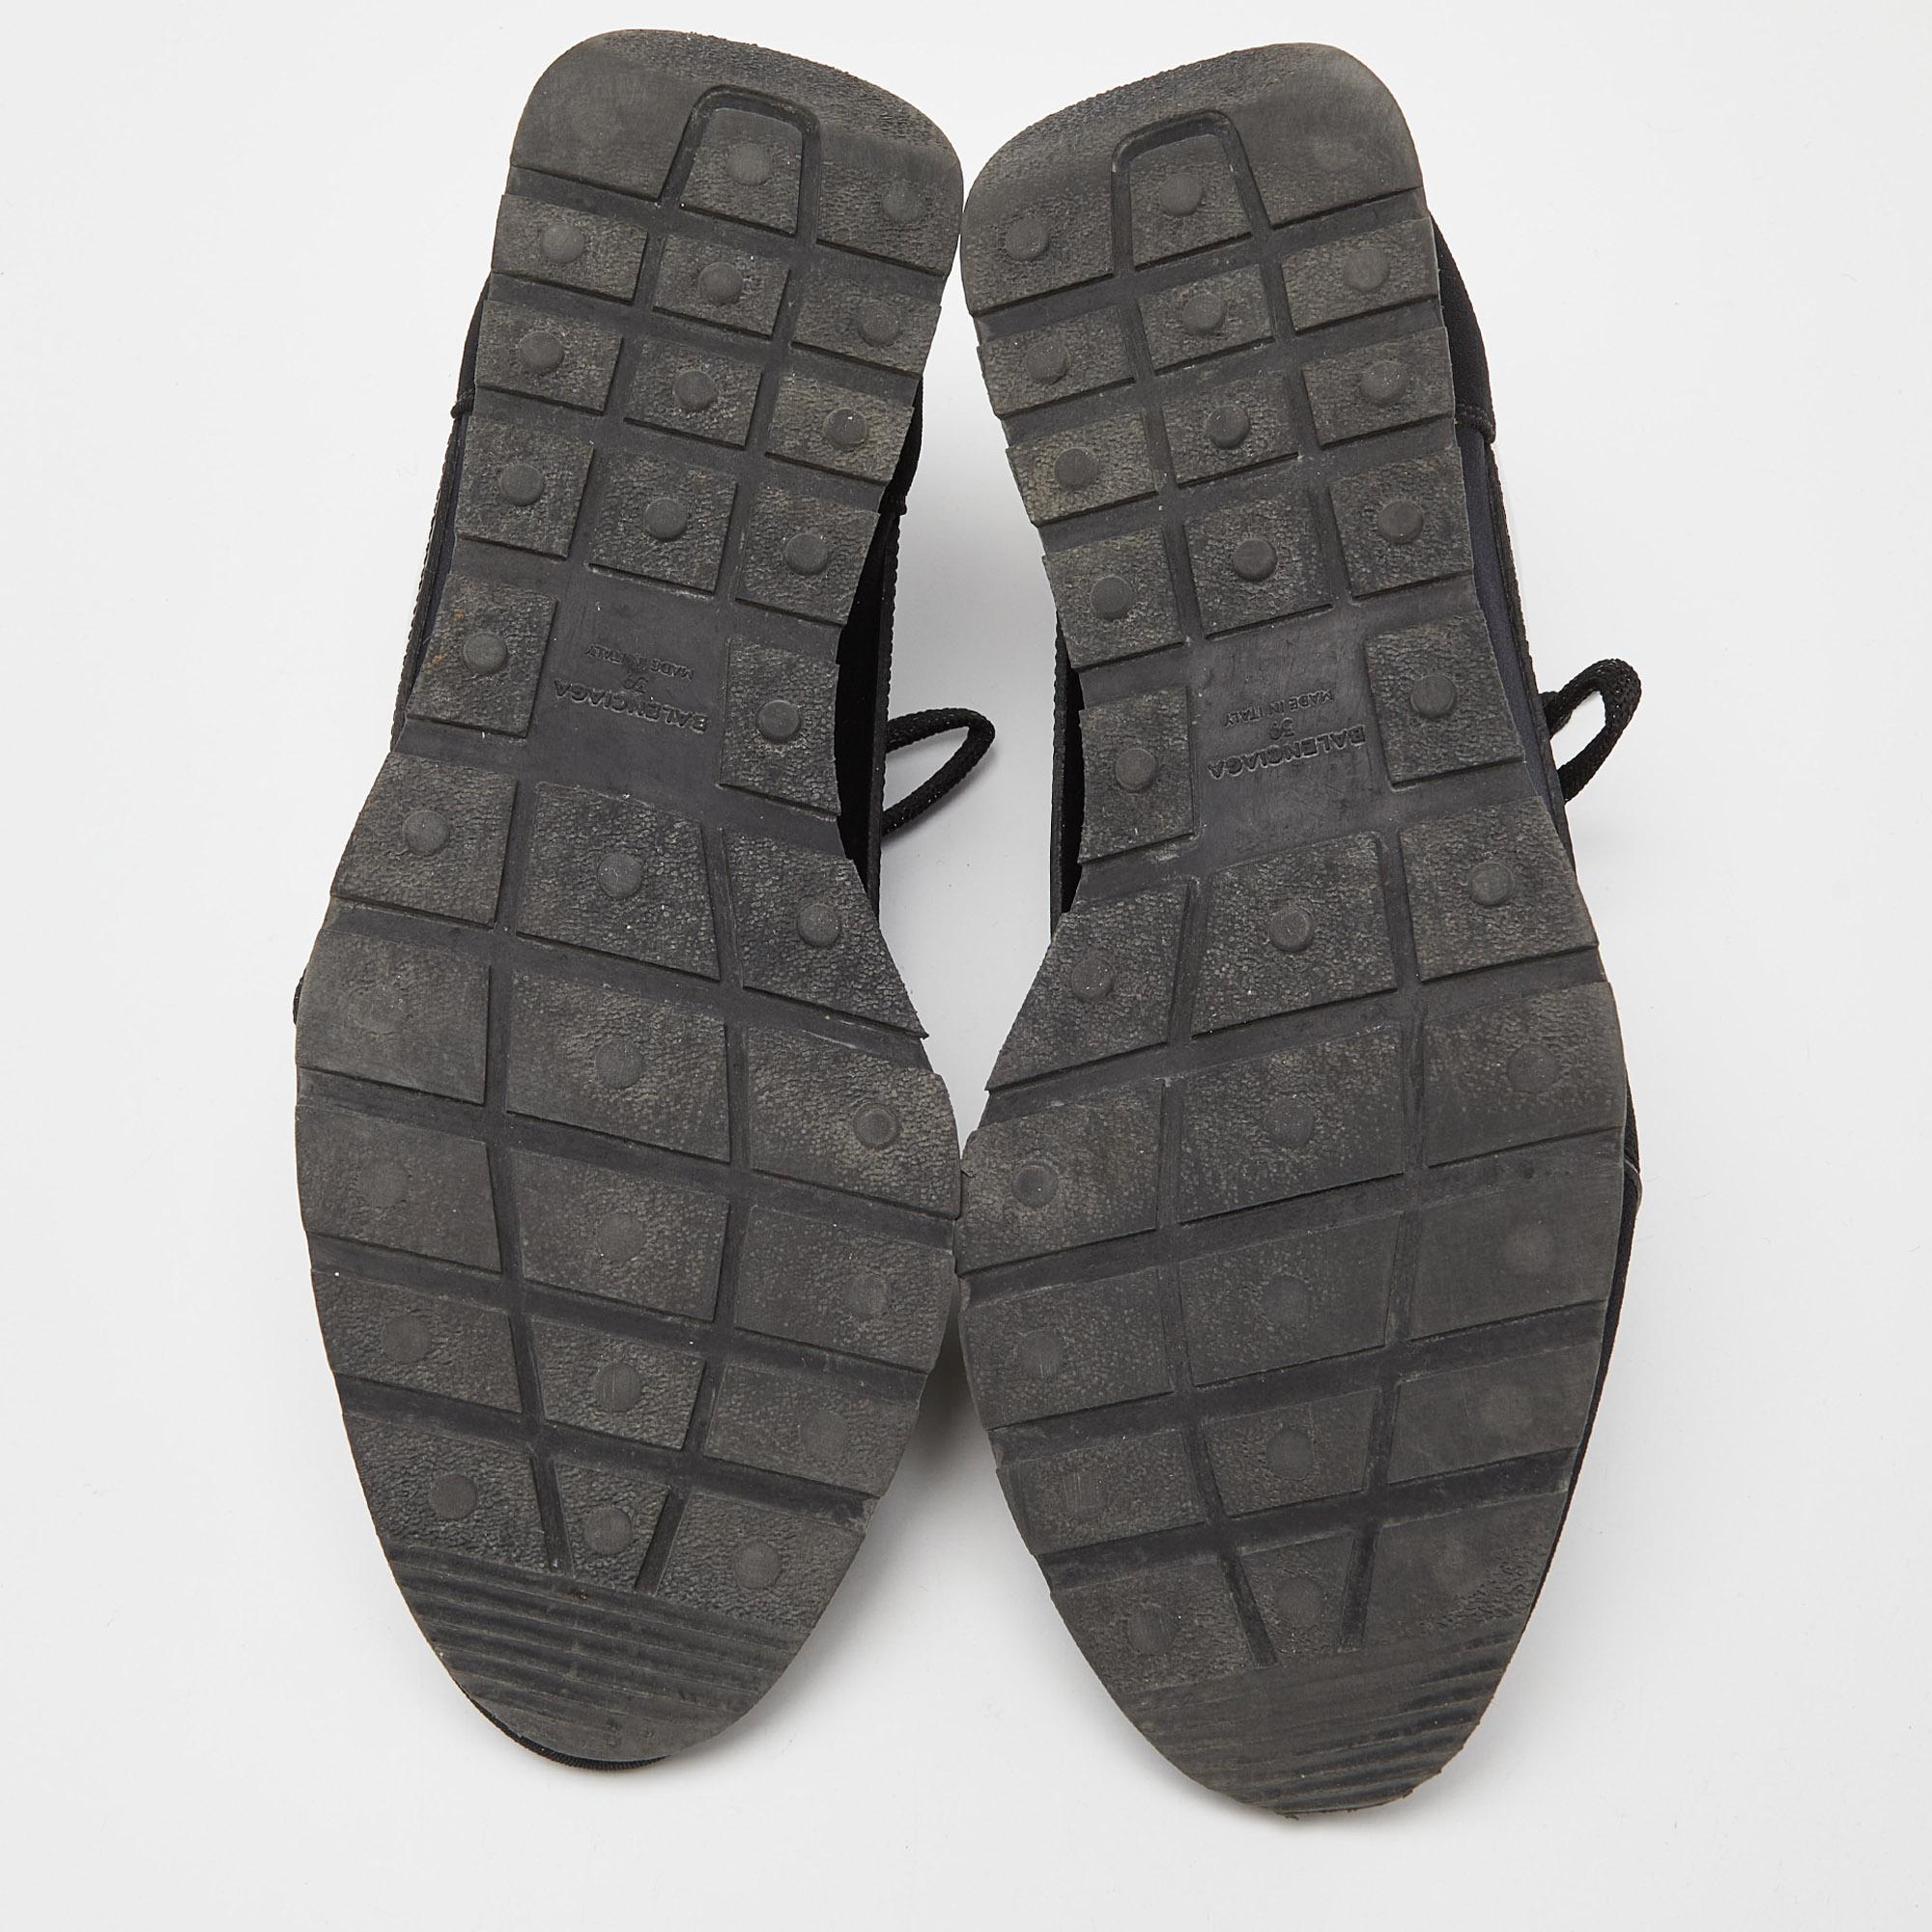 Balenciaga Black Patent And Fabric Race Runner Sneakers Size 39 In Good Condition For Sale In Dubai, Al Qouz 2